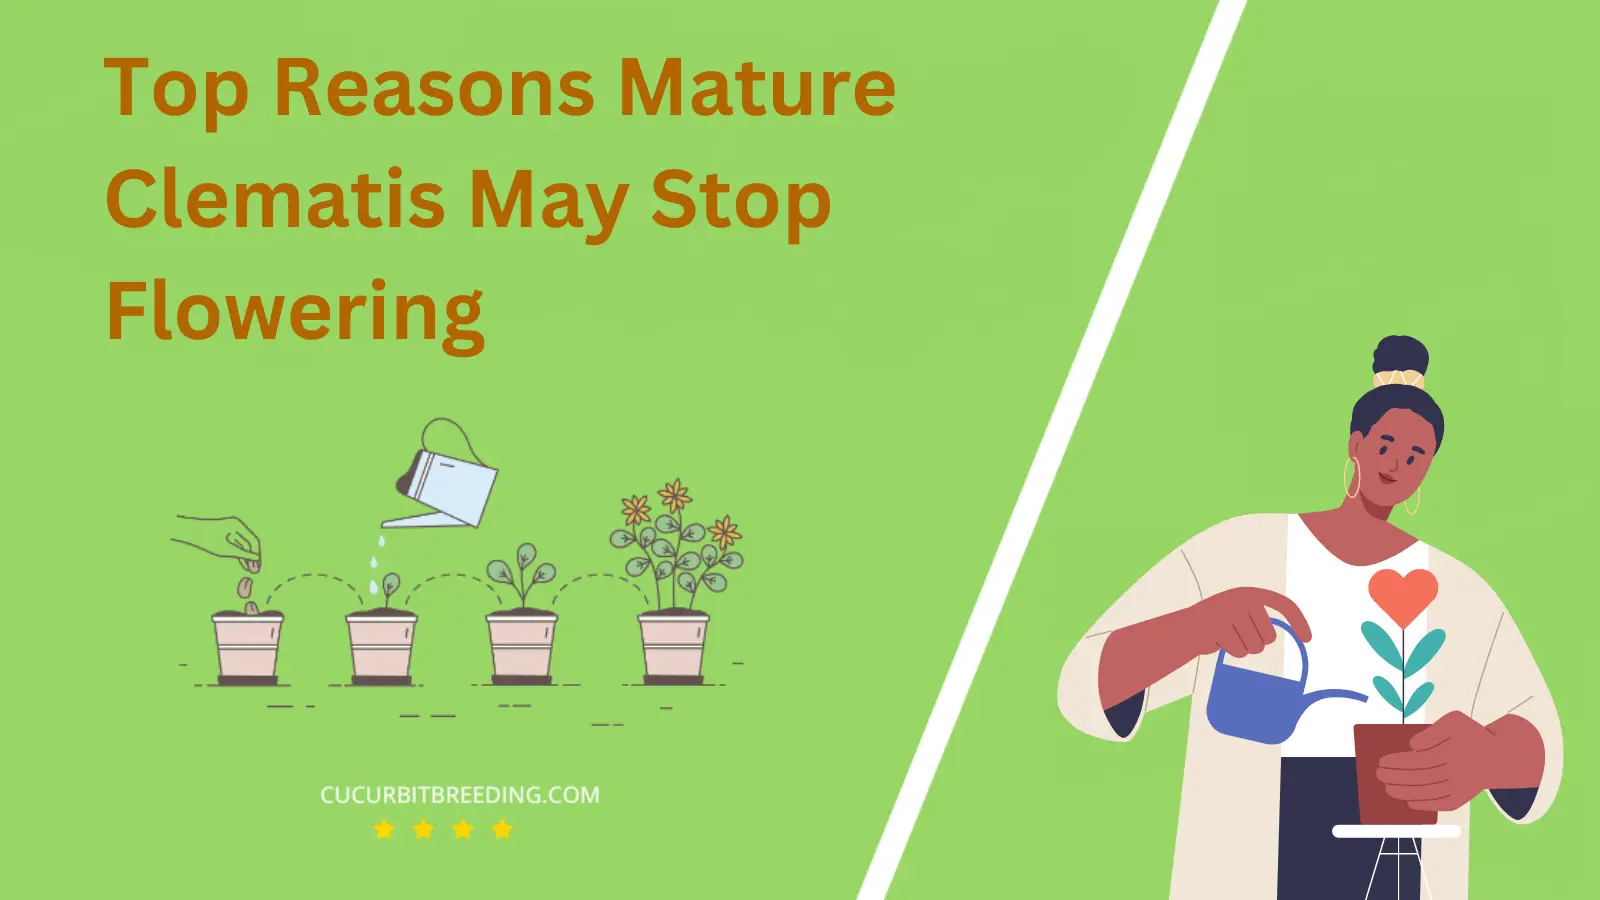 Top Reasons Mature Clematis May Stop Flowering